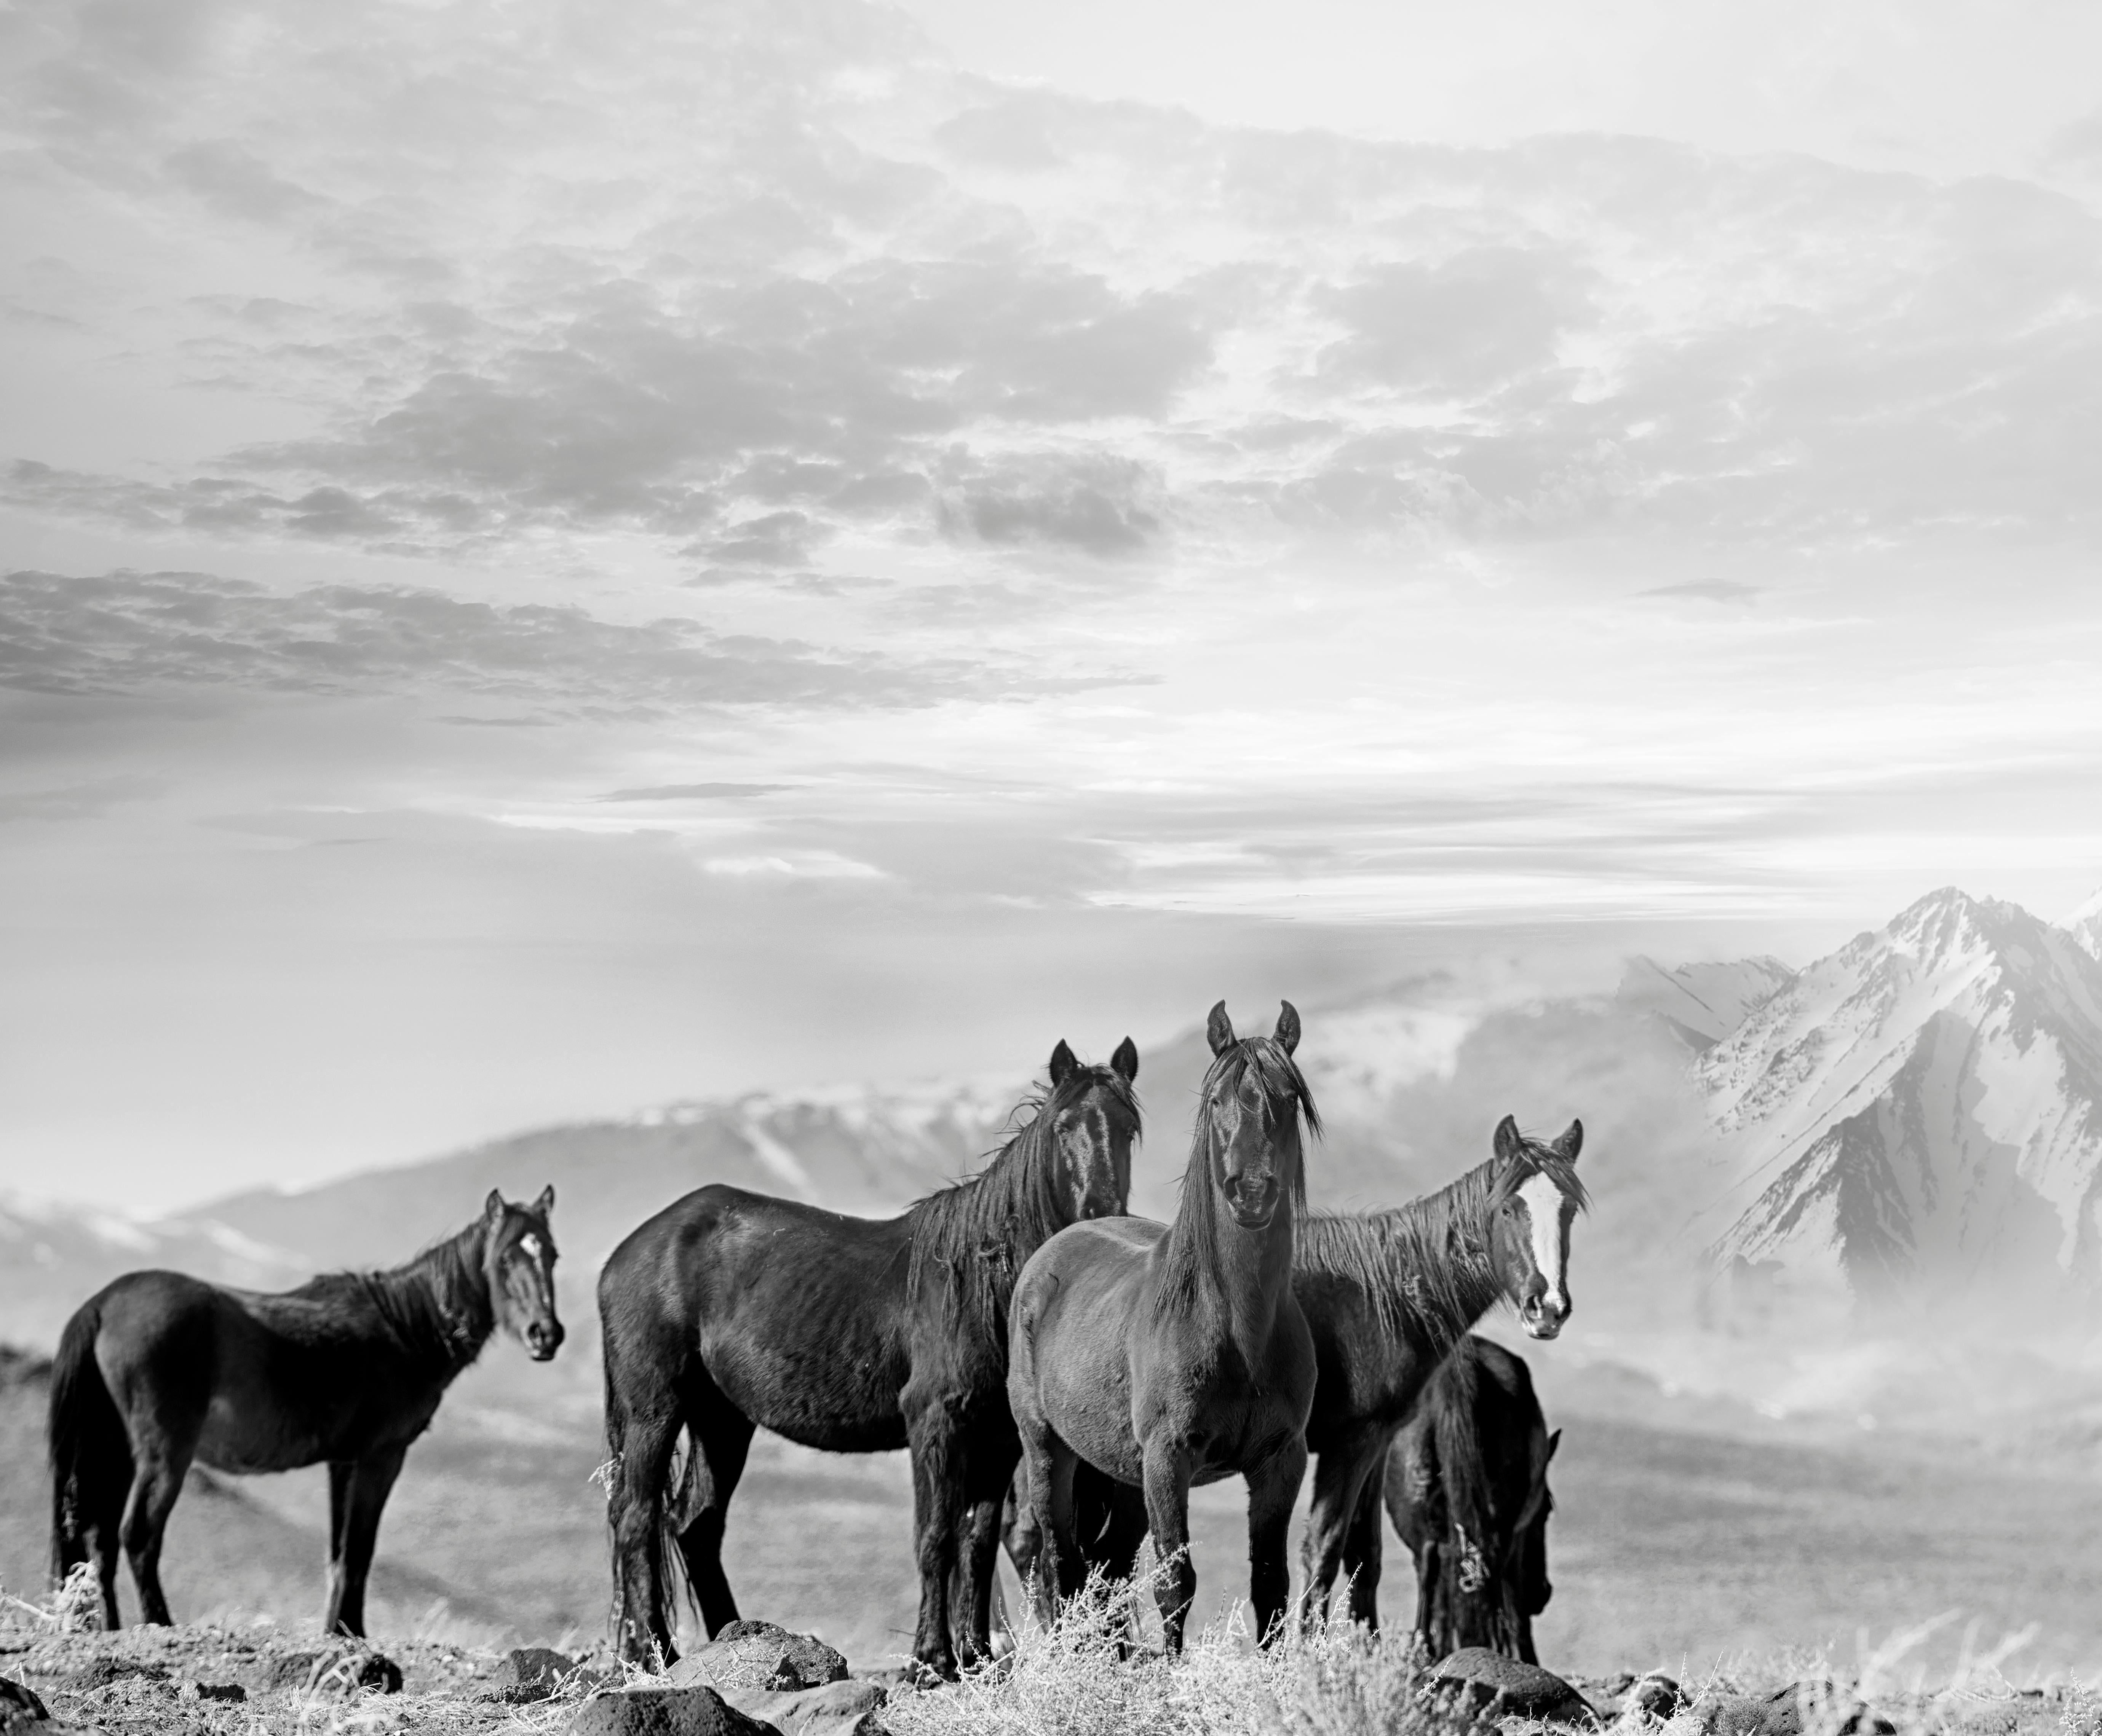 Black and White Photograph Shane Russeck - High Sierra Mustangs 36x48 Photographie en noir et blanc Chevaux sauvages, non signée